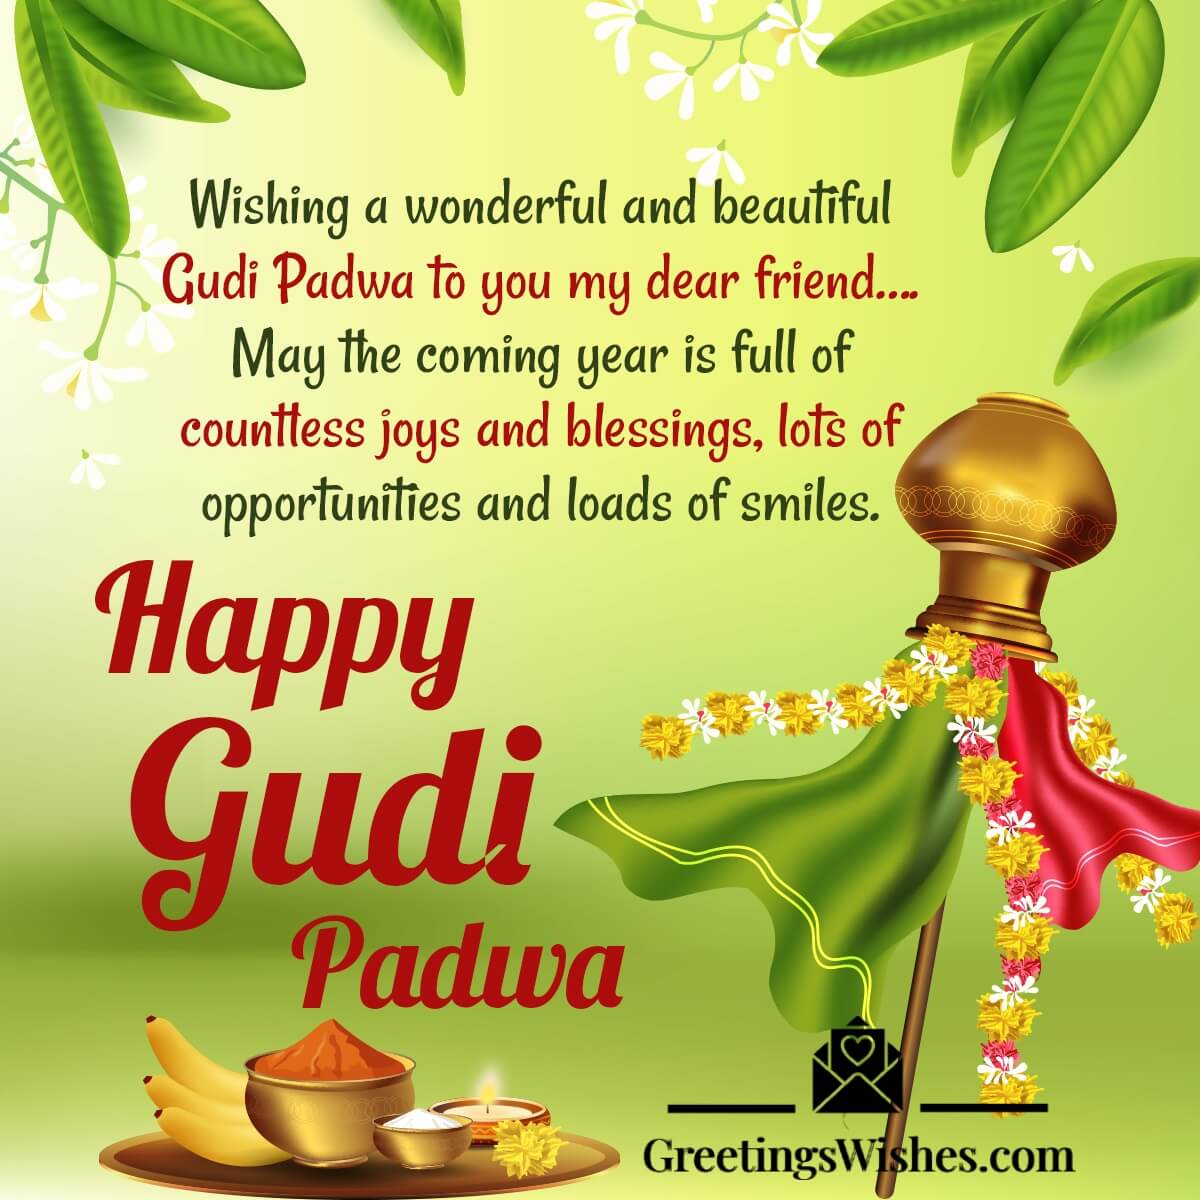 Happy Gudi Padwa Messages